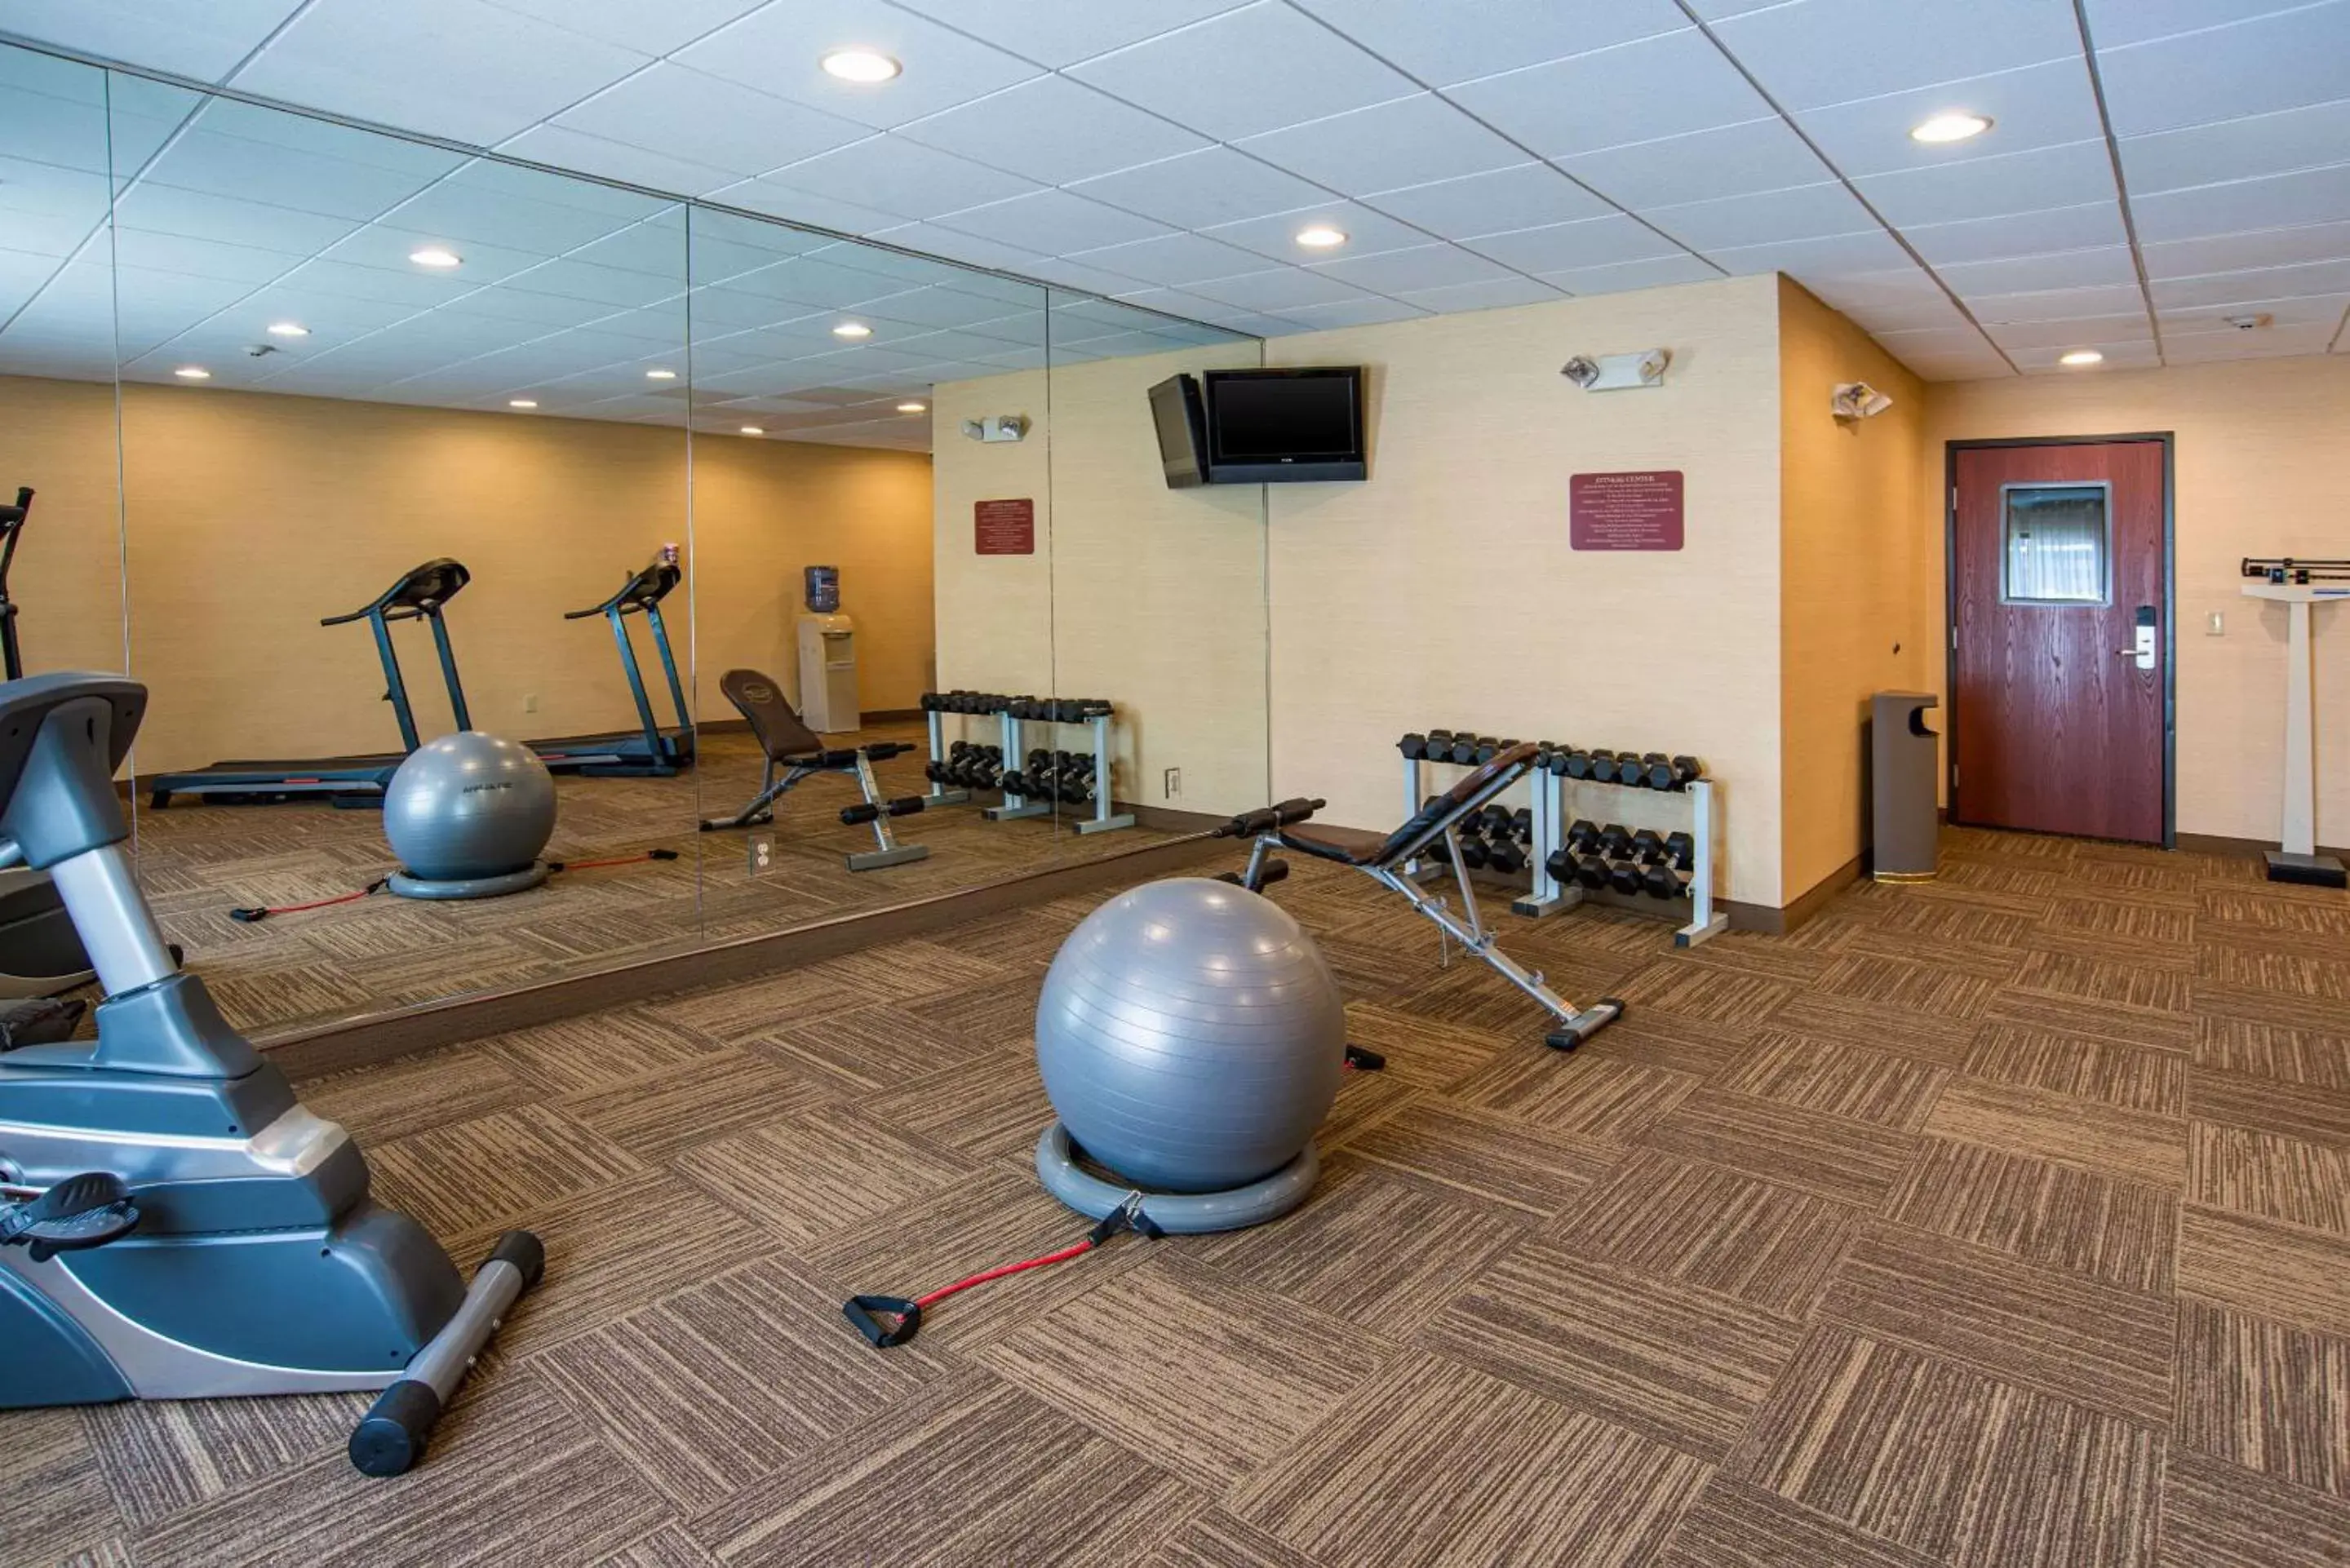 Fitness centre/facilities, Fitness Center/Facilities in Comfort Inn Naugatuck-Shelton, CT